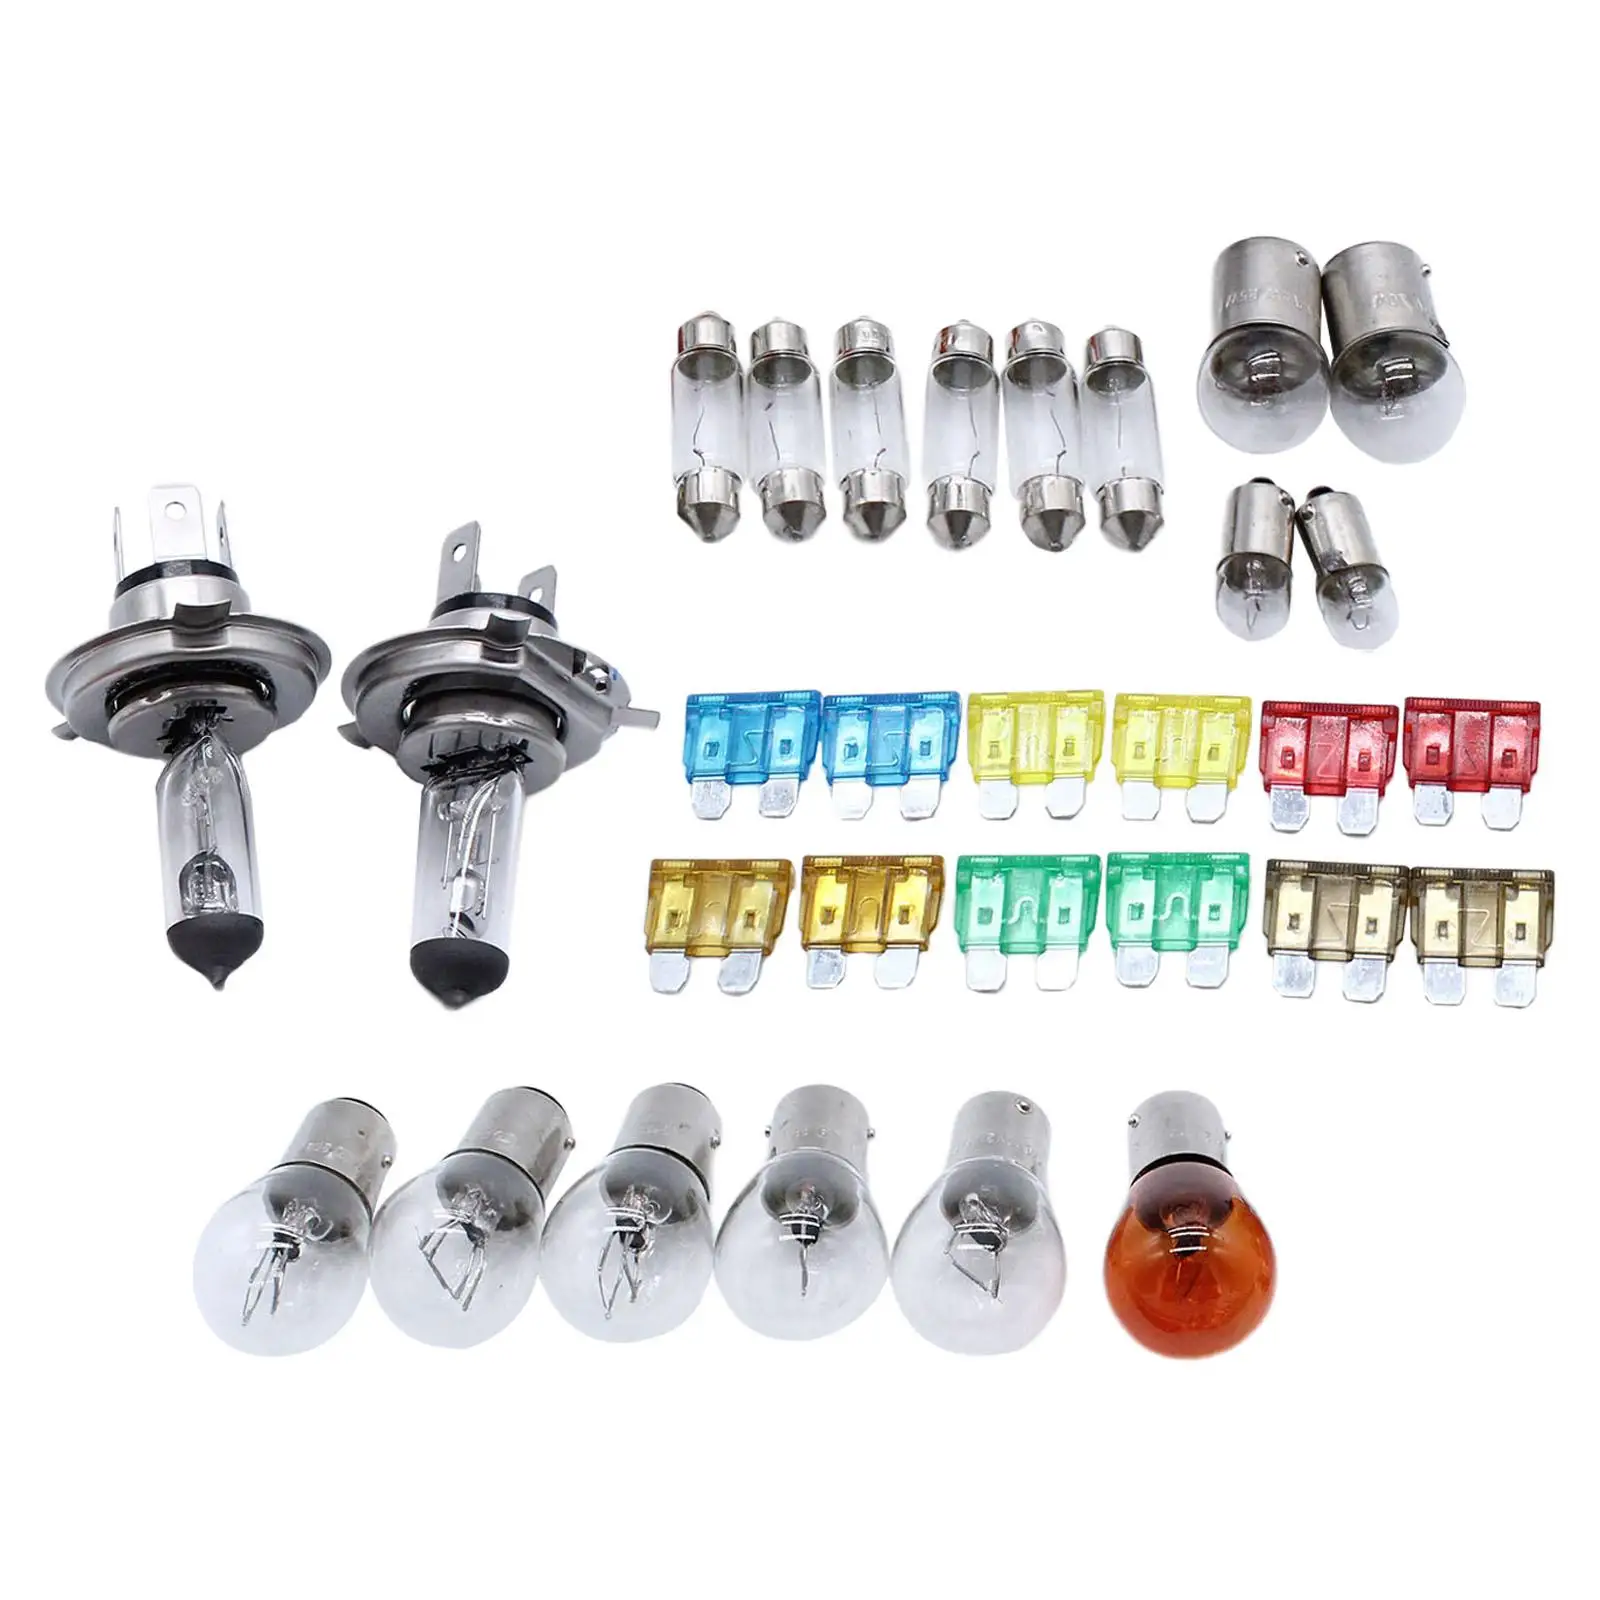 30 Pieces H4 Light Bulb Kit Set Automotive Headlight Bulbs Kit Spares Parts Fit for Cars